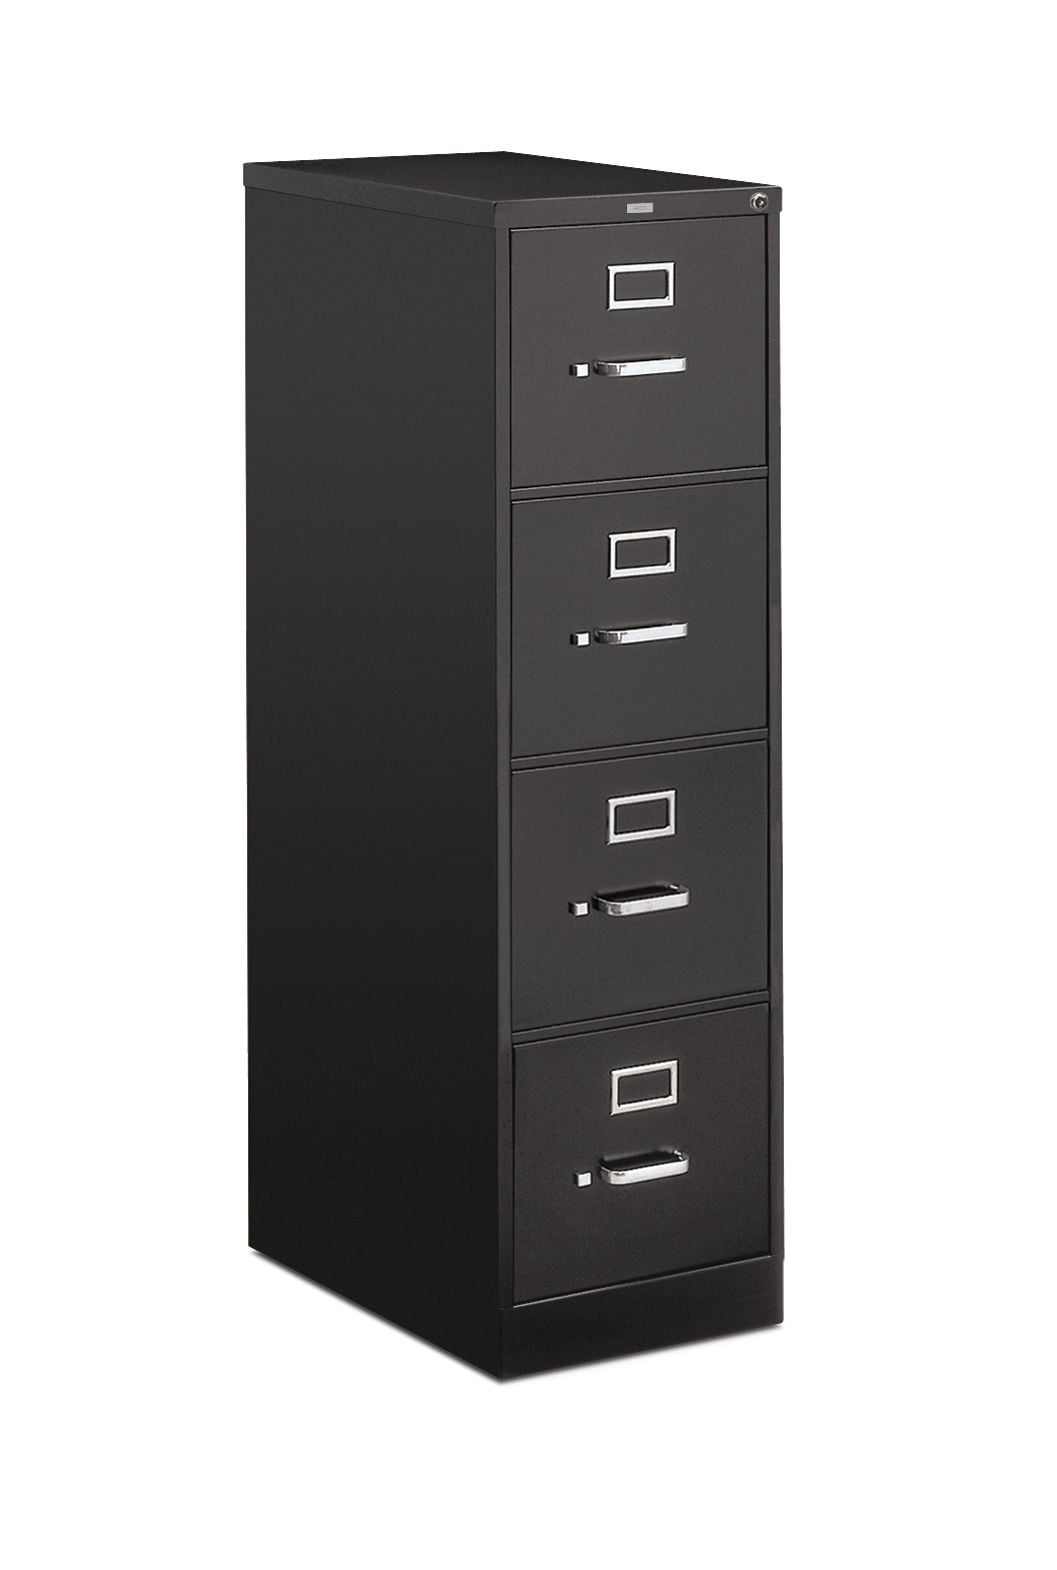 Hon 510 Series Vertical File Cabinet, Metal Filing Cabinets 4 Drawer